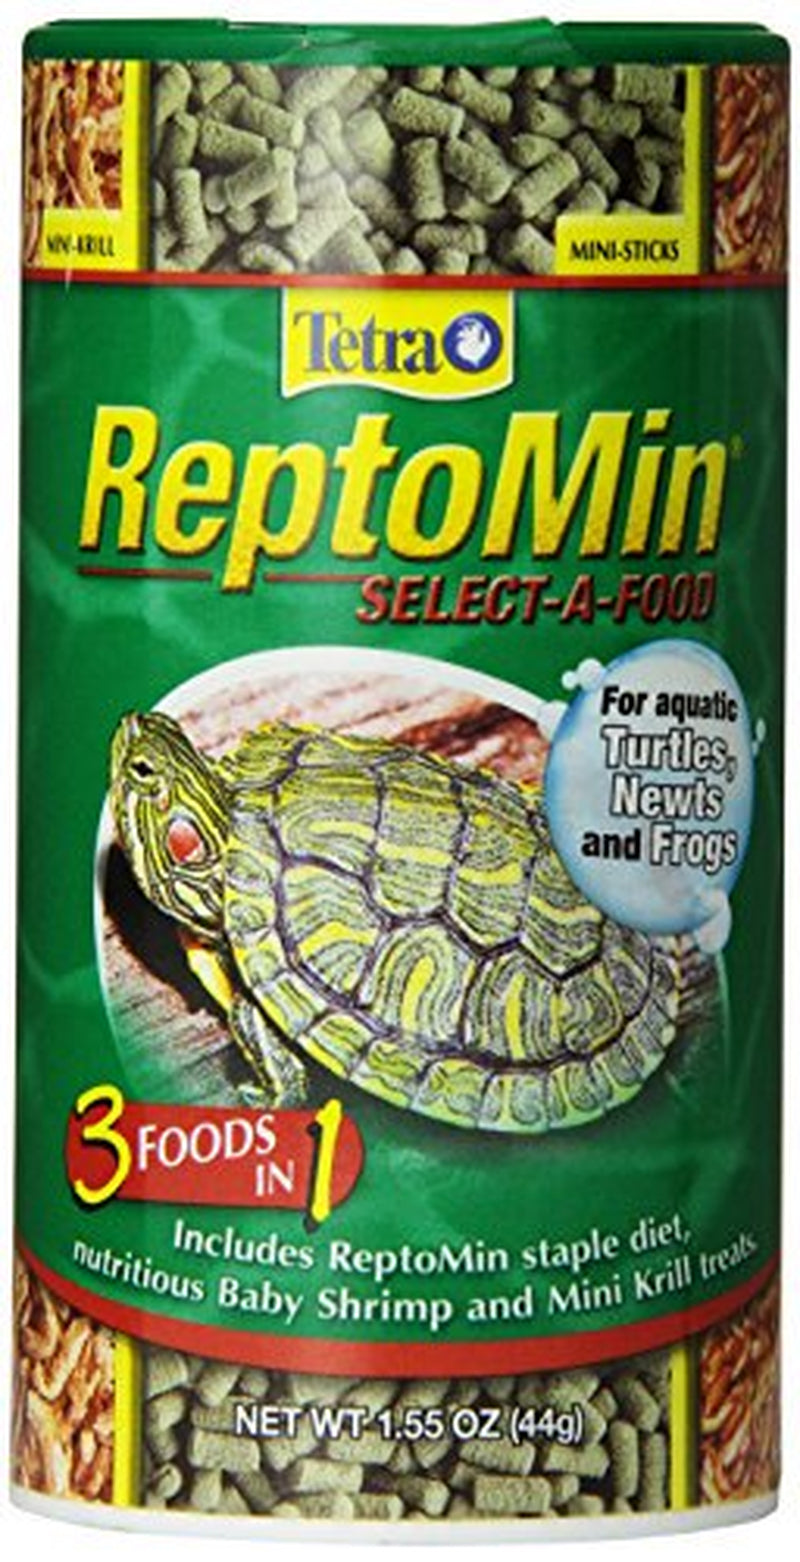 Tetra Reptomin Select-A-Food 1.55 Ounces, for Aquatic Turtles